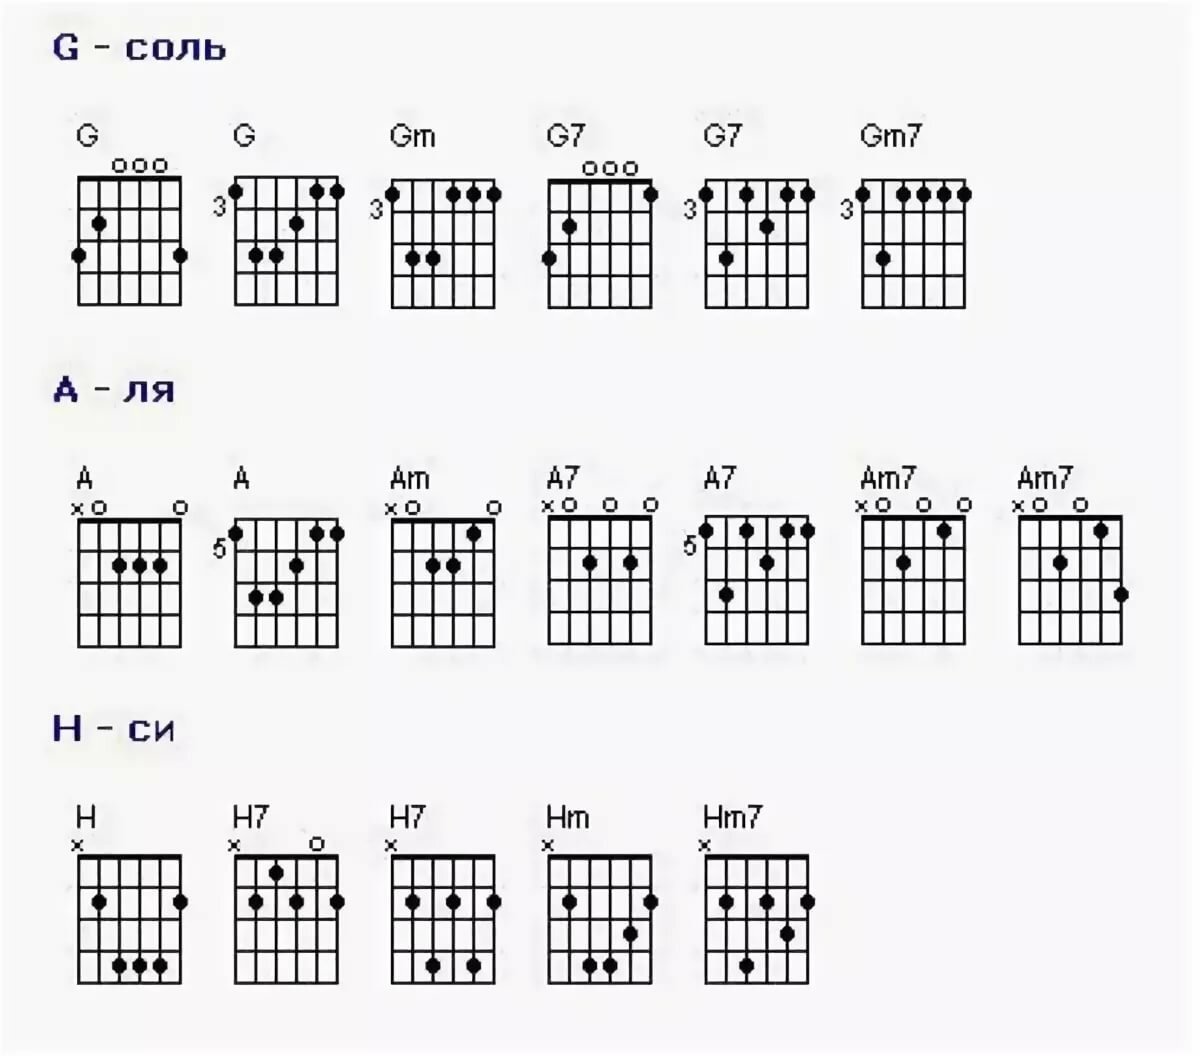 Аккорд с на гитаре схема. Аккорды для гитары для начинающих 6 струн. Базовые аккорды на гитаре 6 струн. Аккорды на гитаре 6 струн схема. Схемы аккордов 6 струнной гитары.